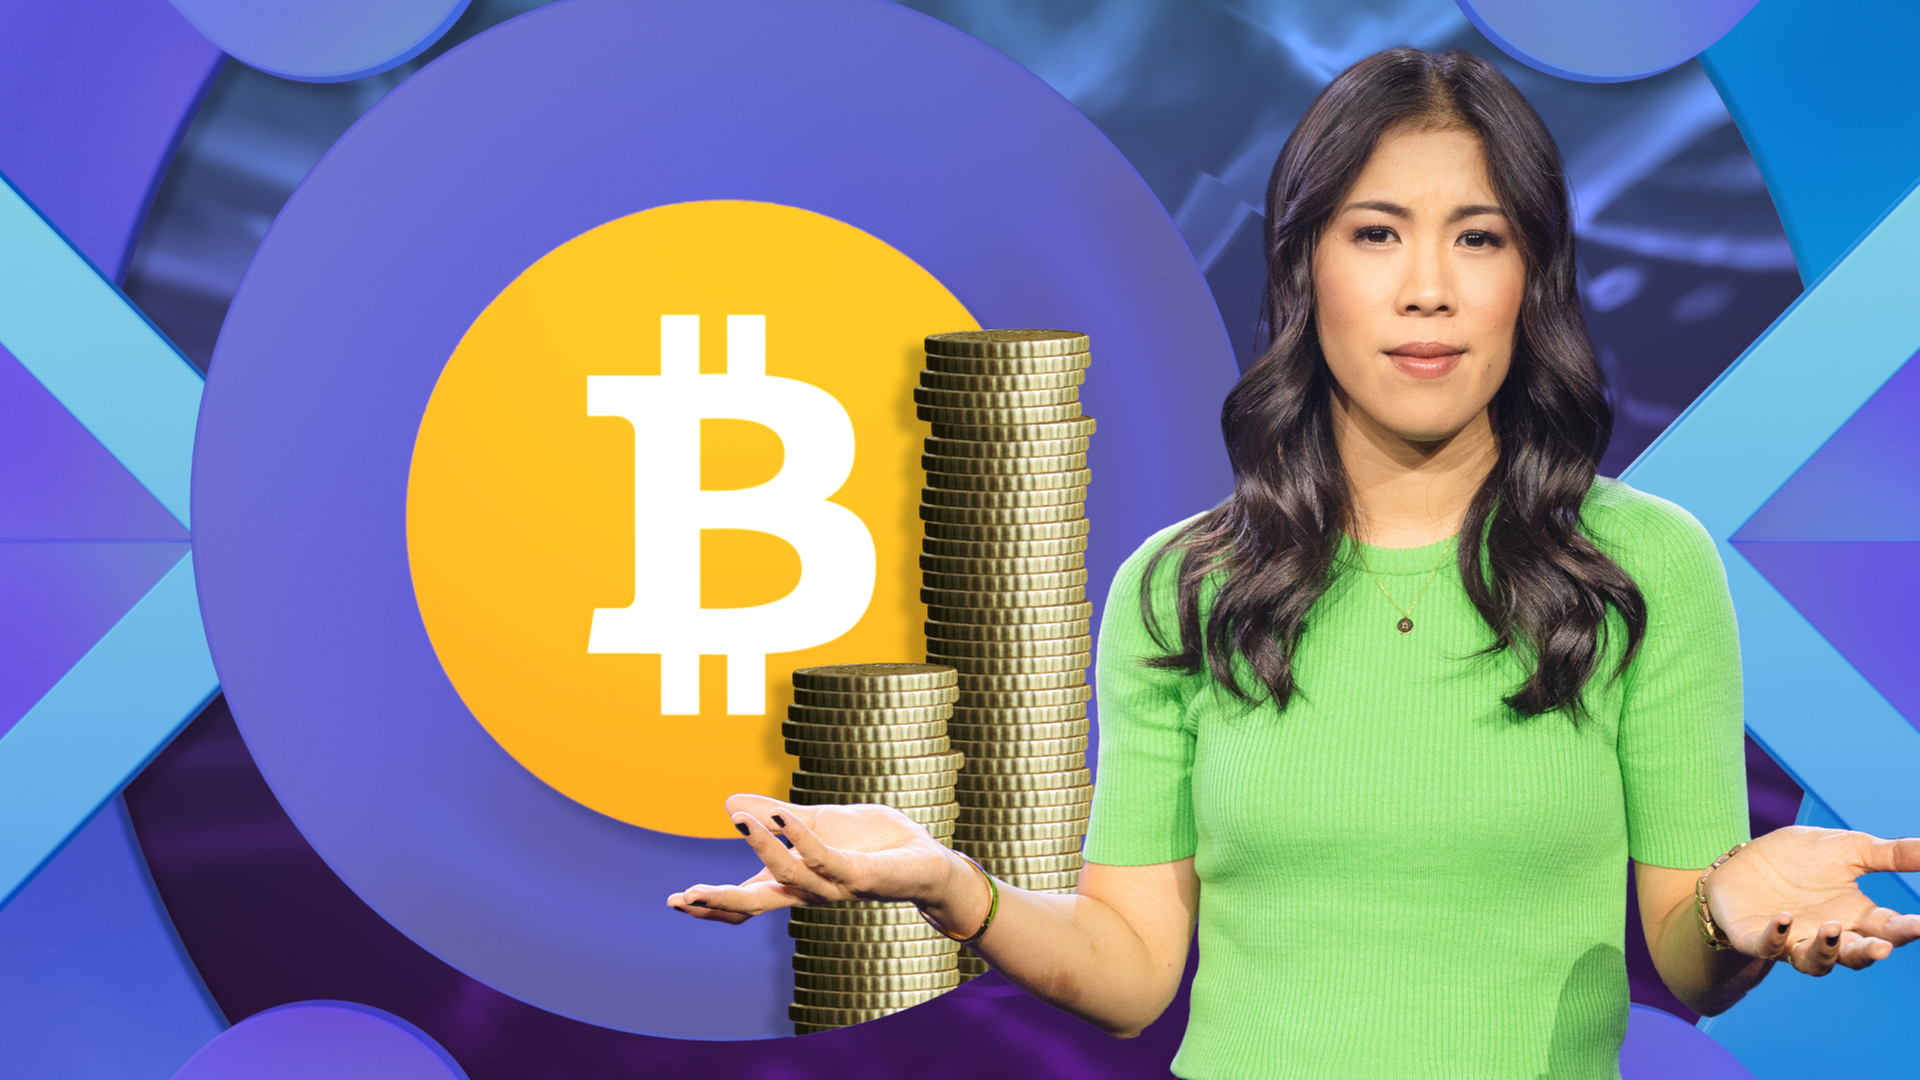 MAITHINK X -Die Show mit Dr. Mai Thi Nguyen-Kim | Sendung 16 - Kryptowährung Bitcoin – jetzt erst recht?